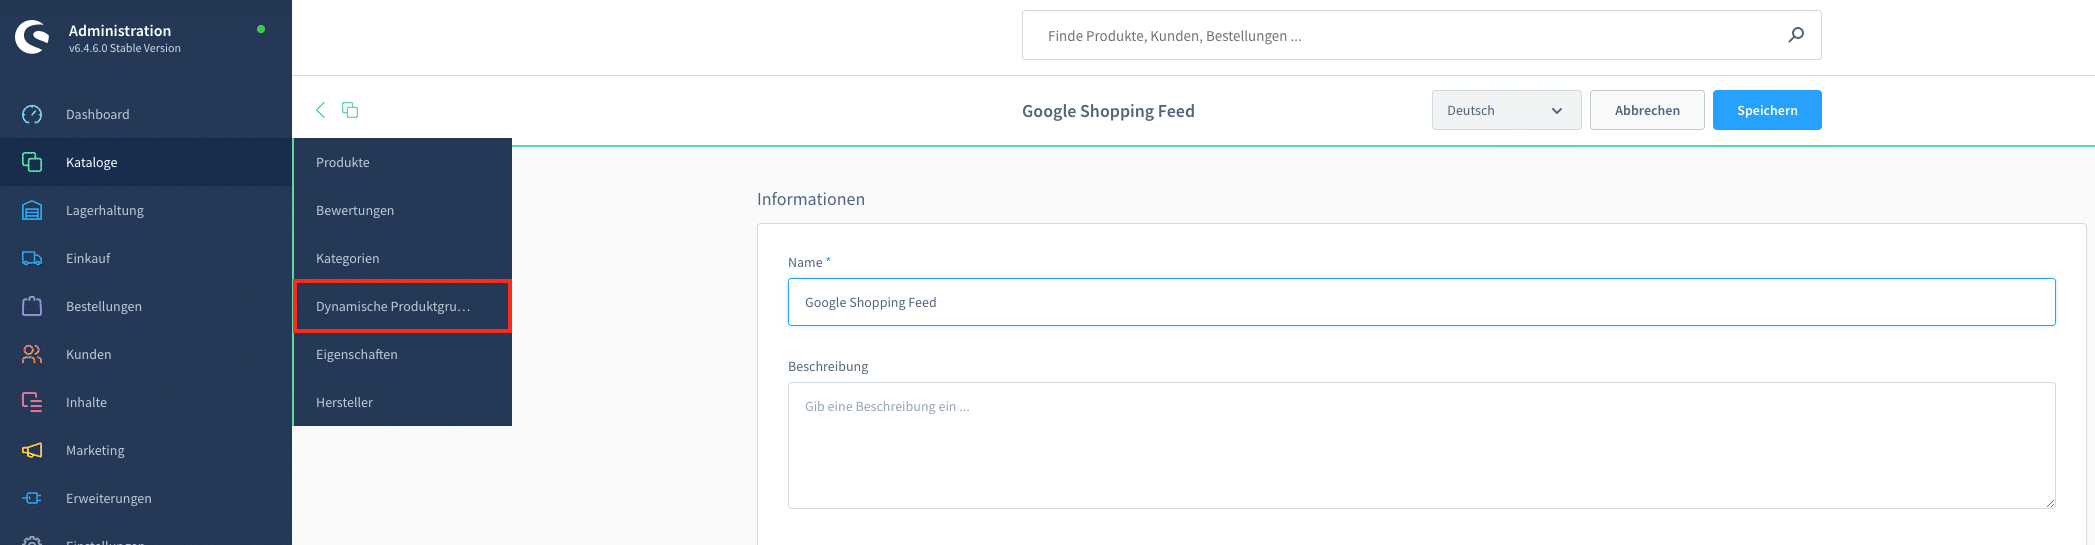 Shopware-6-Google-Shopping-Feed-dynamische-Produktgruppe